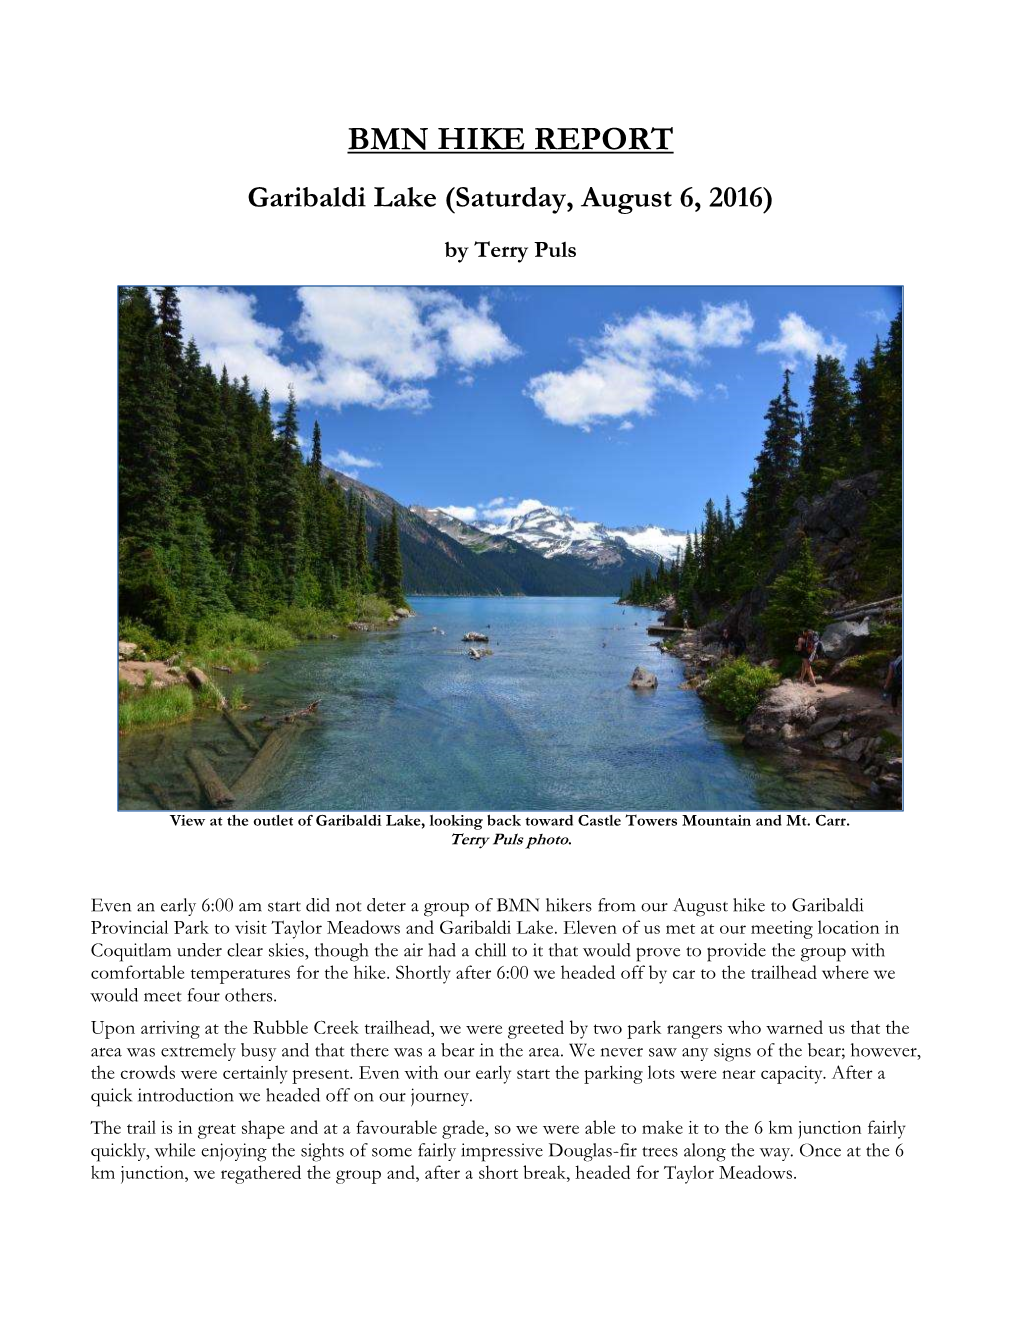 Garibaldi Lake (Saturday, August 6, 2016)